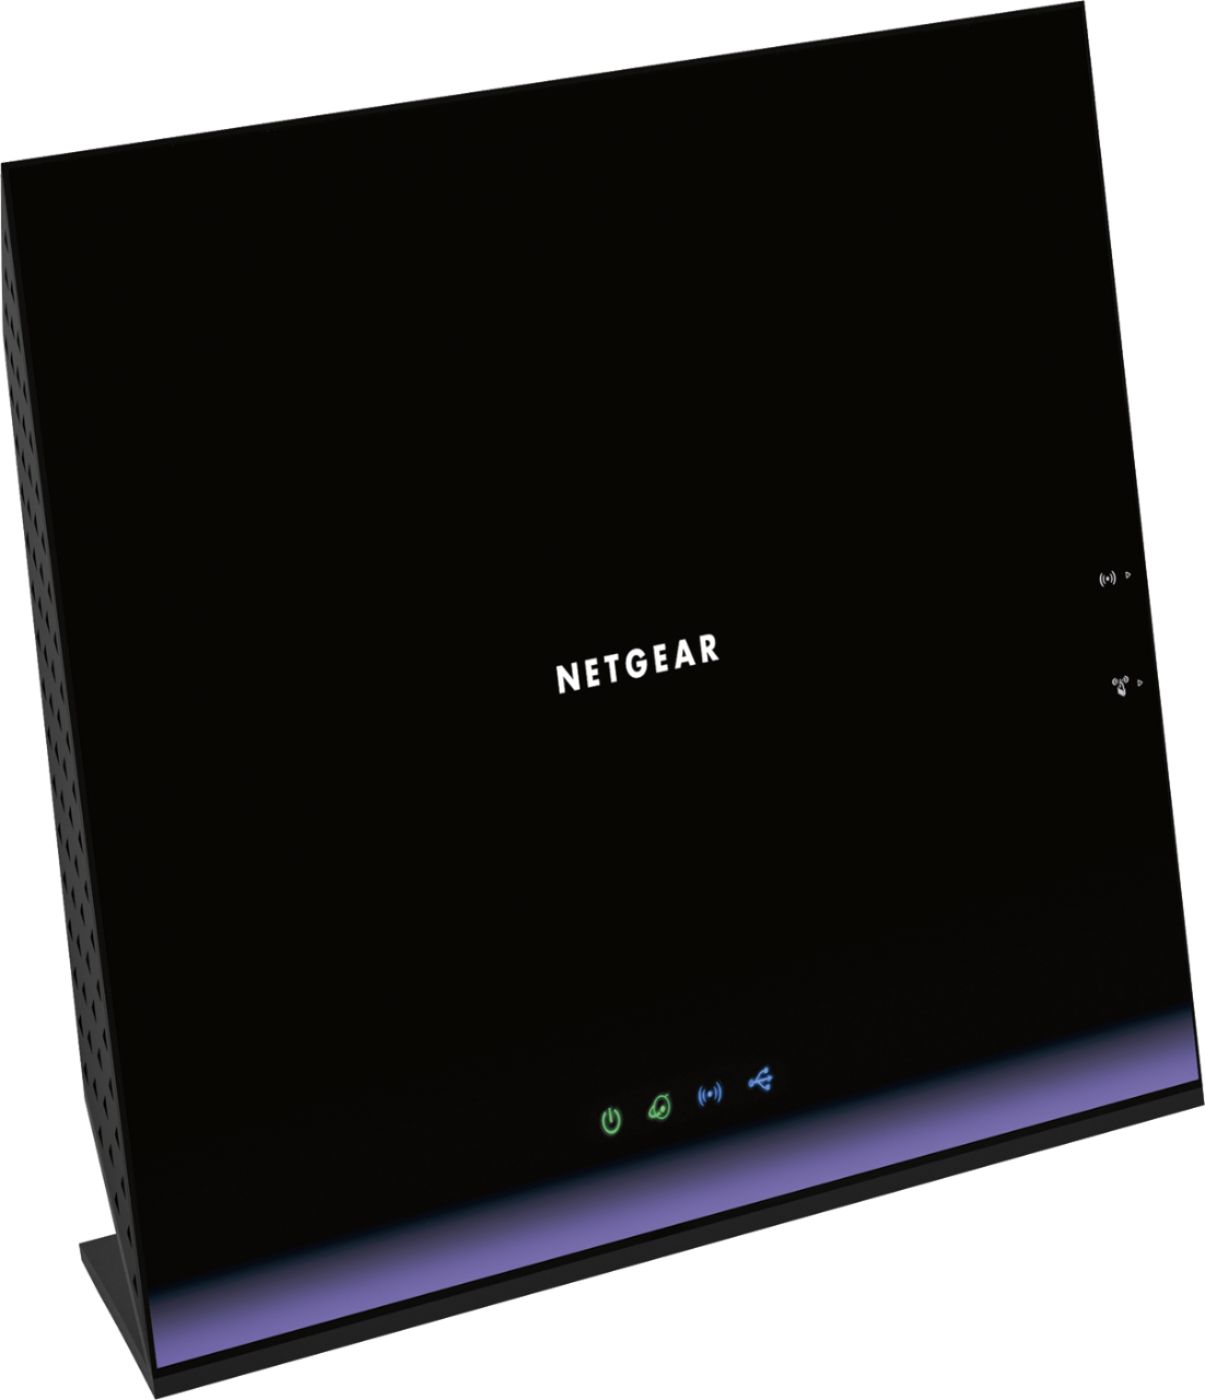 Angle View: NETGEAR - AC1600 Dual-Band Wi-Fi 5 Router - Black